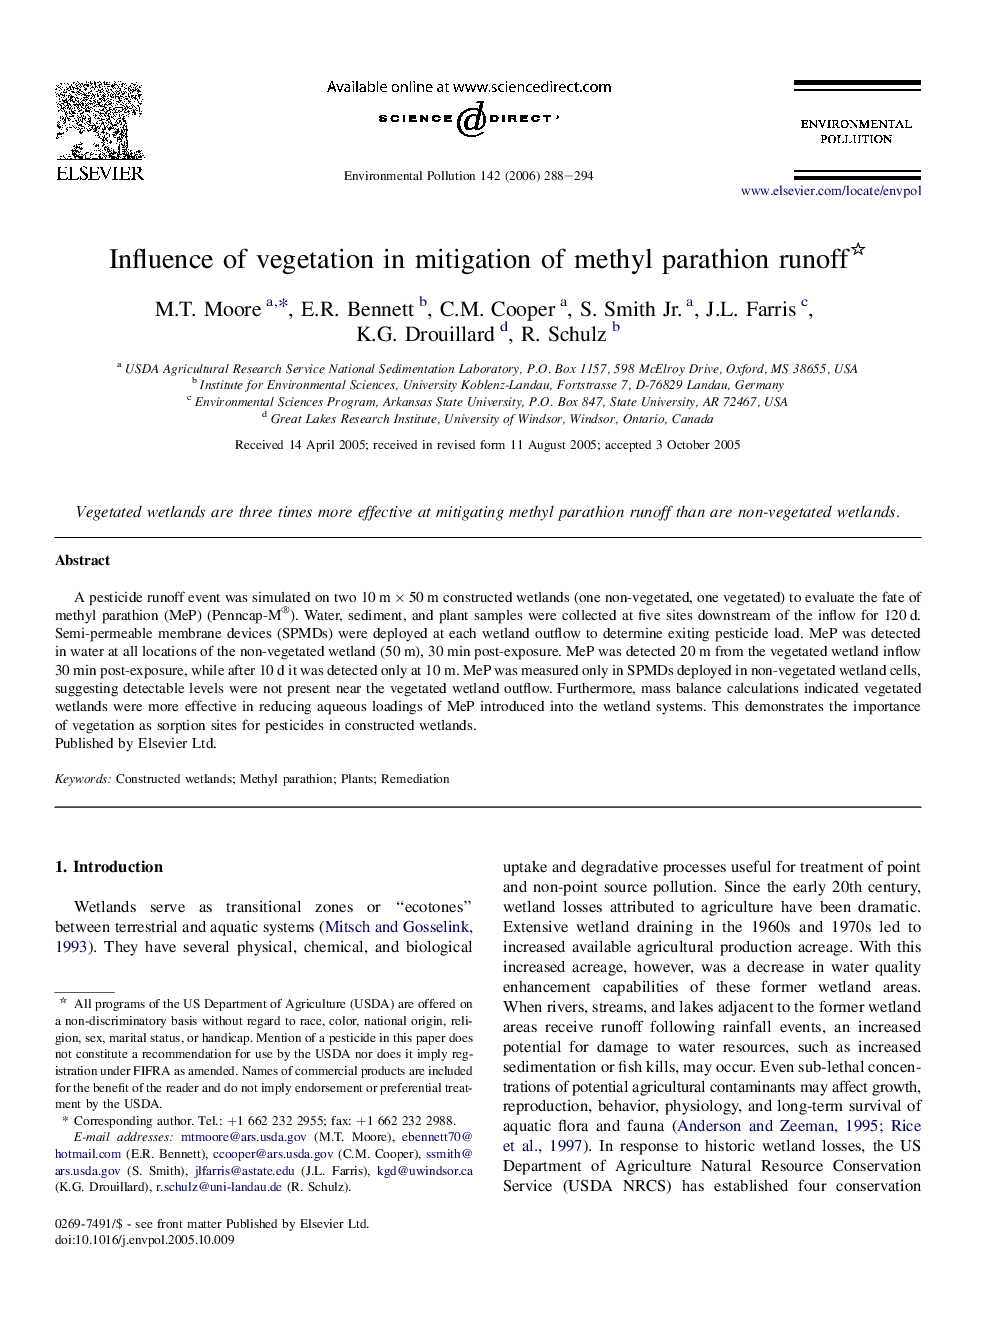 Influence of vegetation in mitigation of methyl parathion runoff 